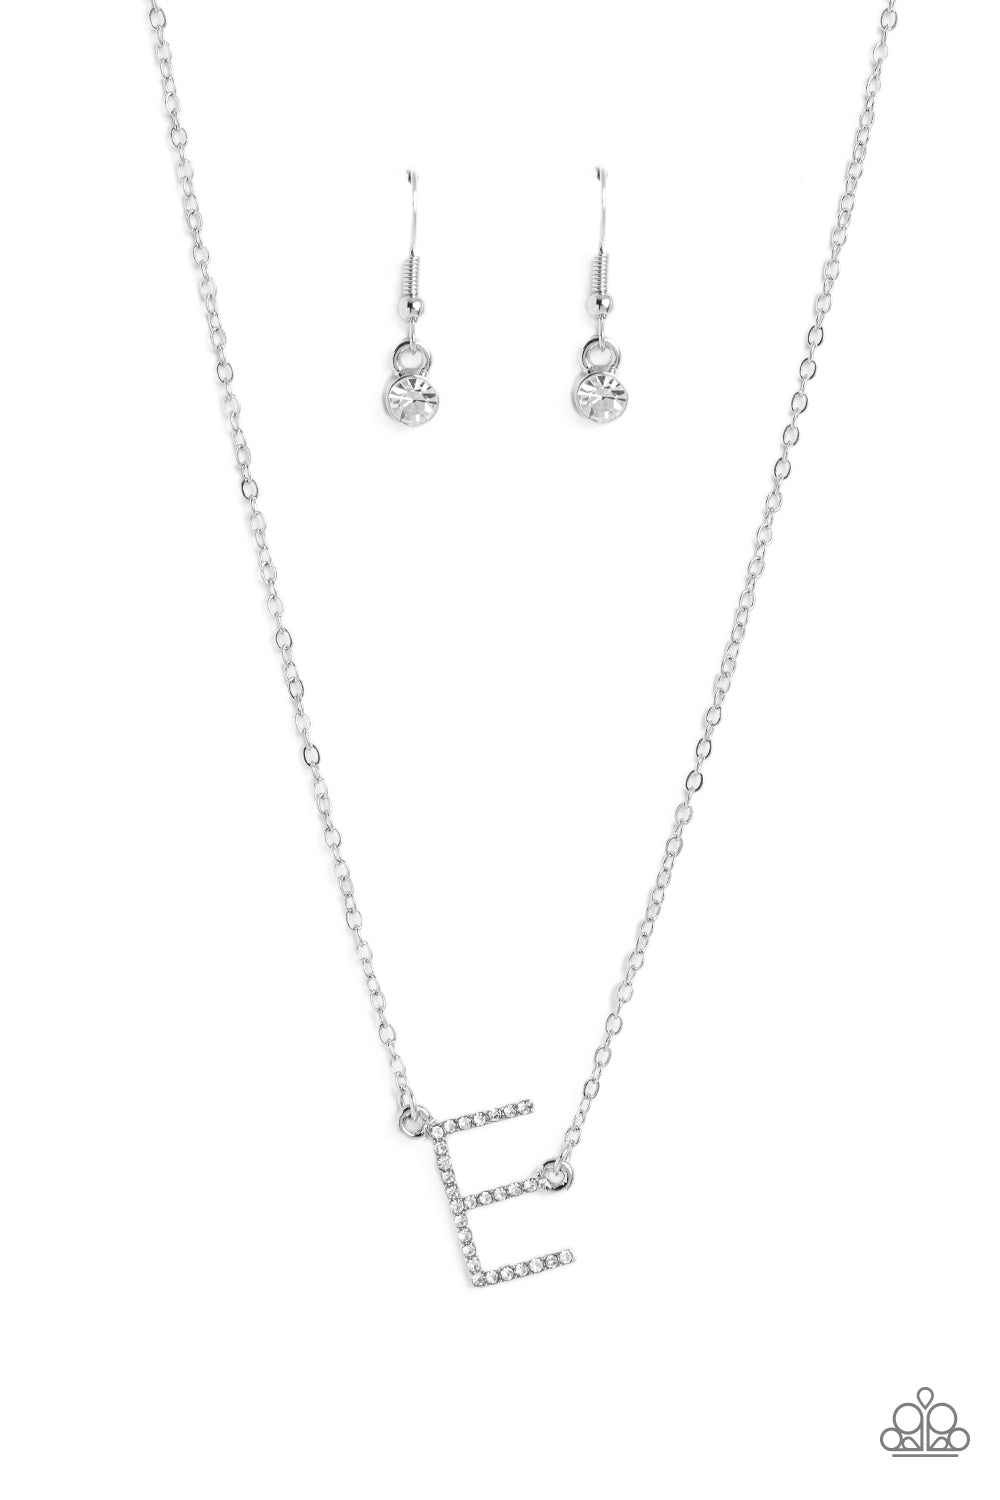 INITIALLY Yours - "E" White Rhinestone Pendant Paparazzi Necklace & matching earrings